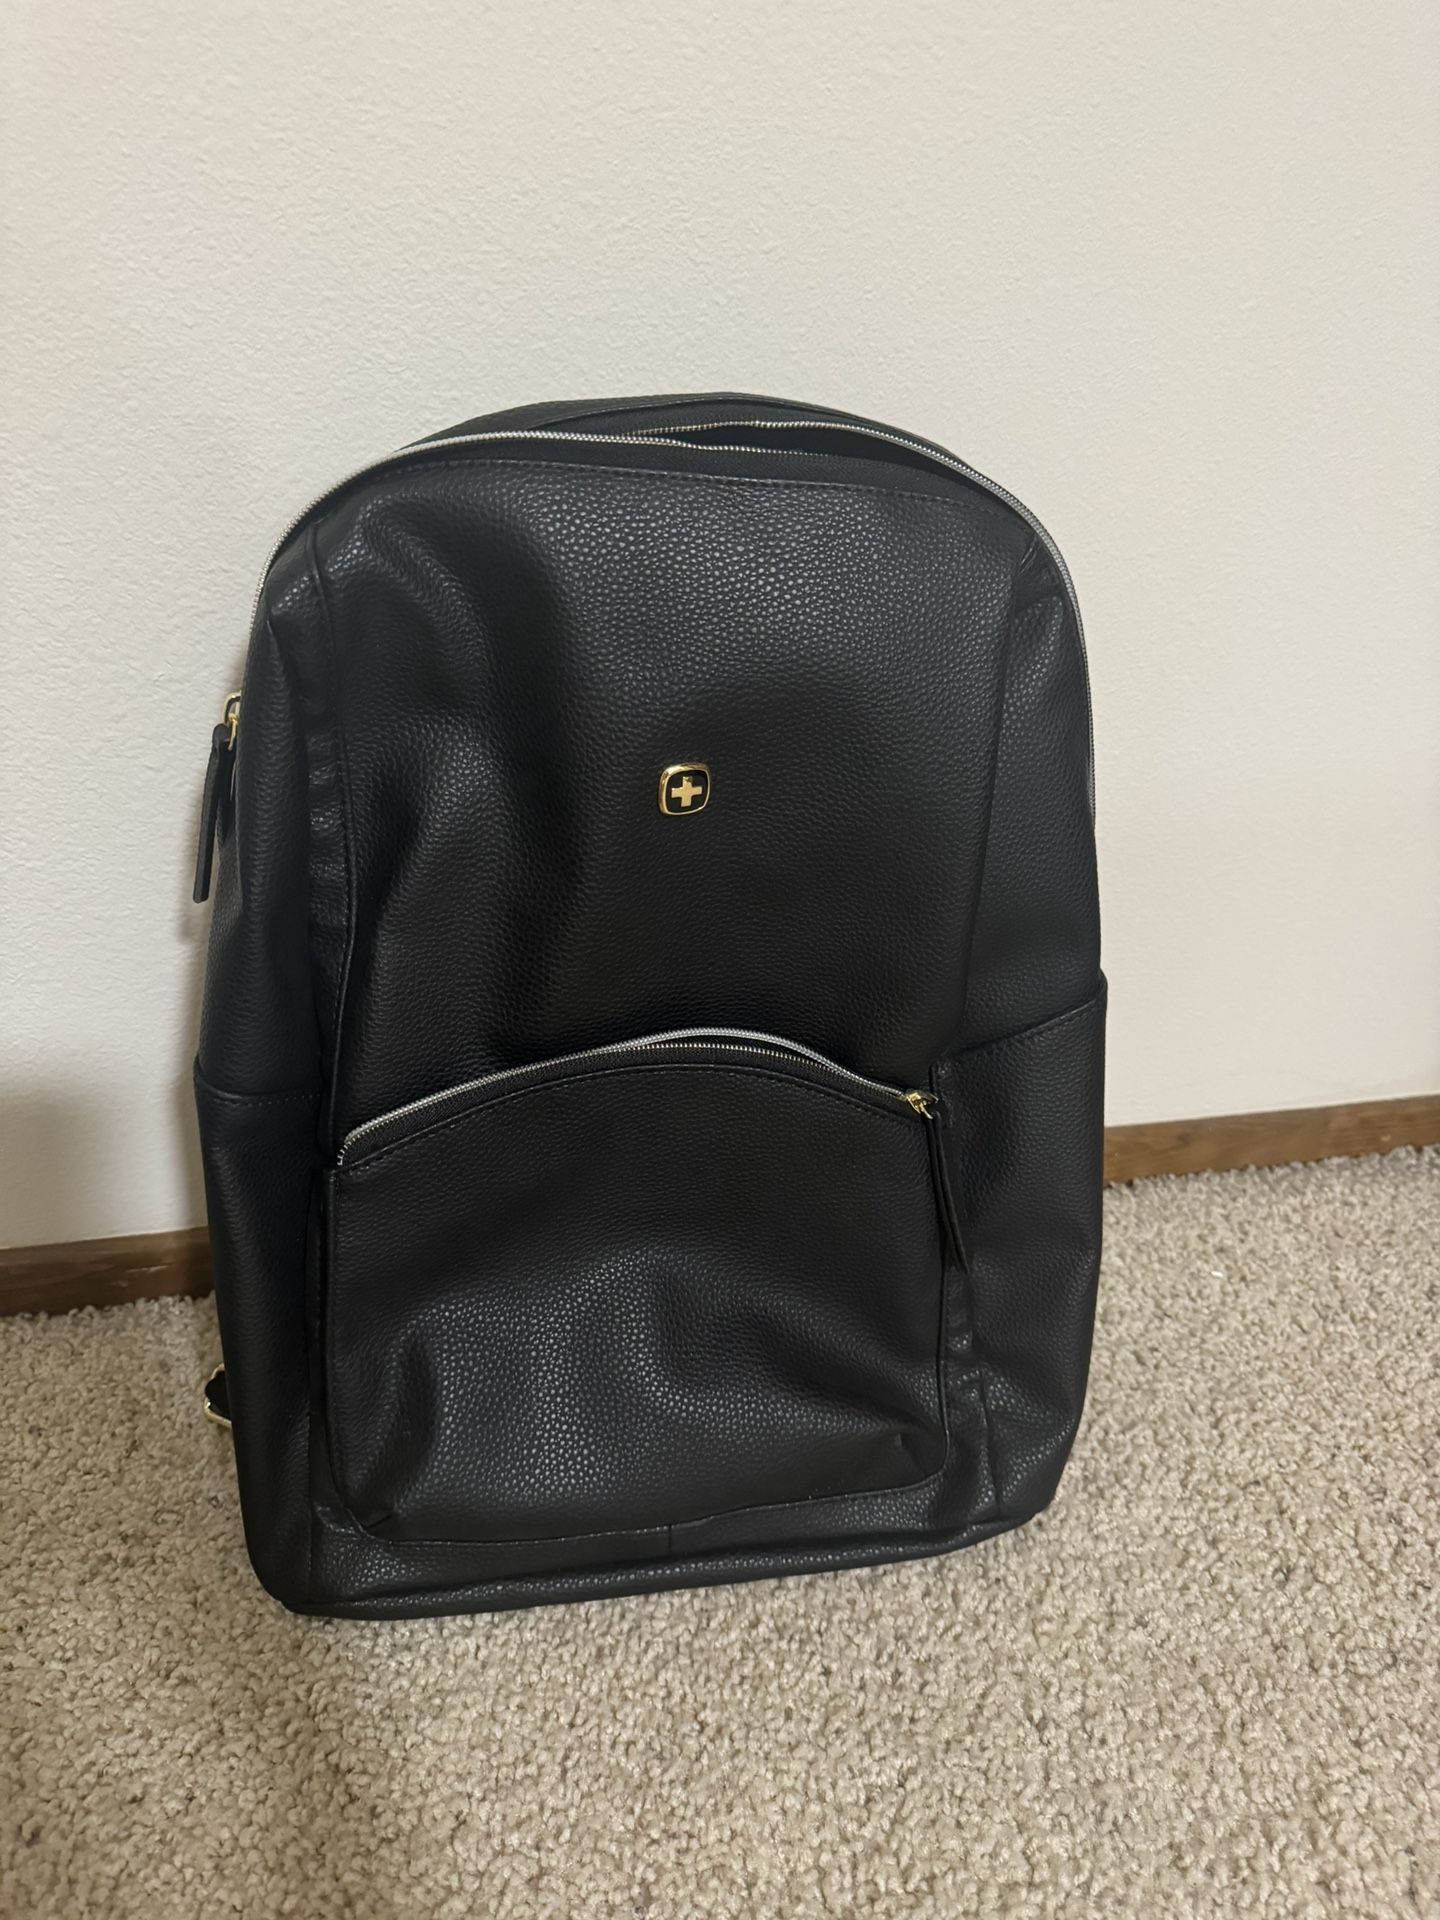 Brand New Swiss gear Laptop backpack 